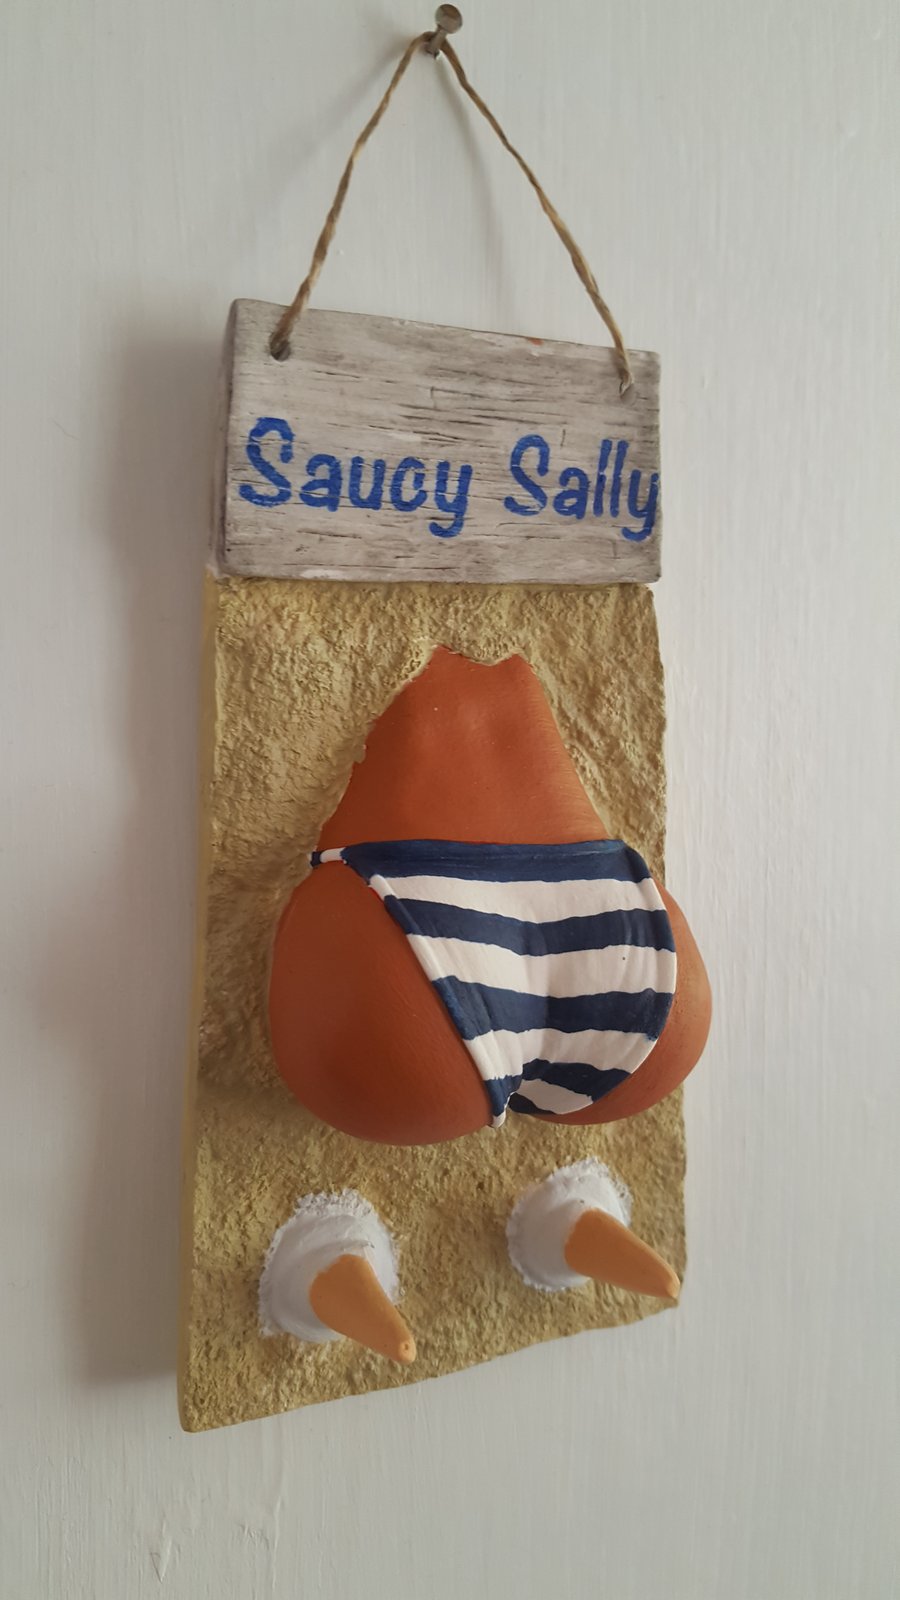 Saucy Sally